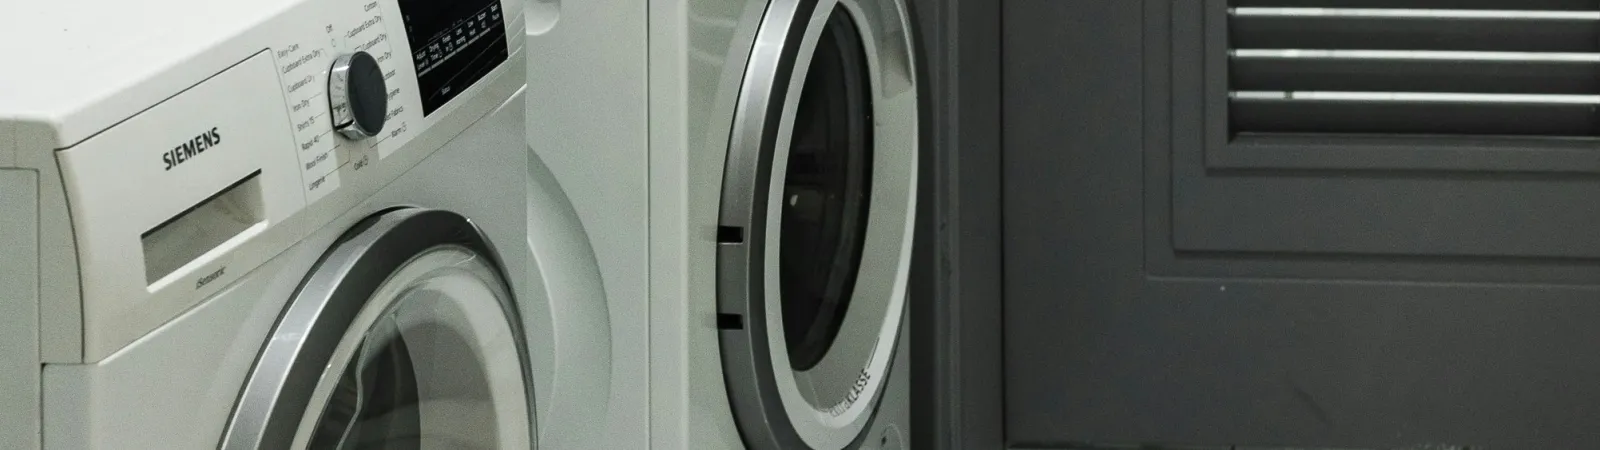 a washing machine and dryer